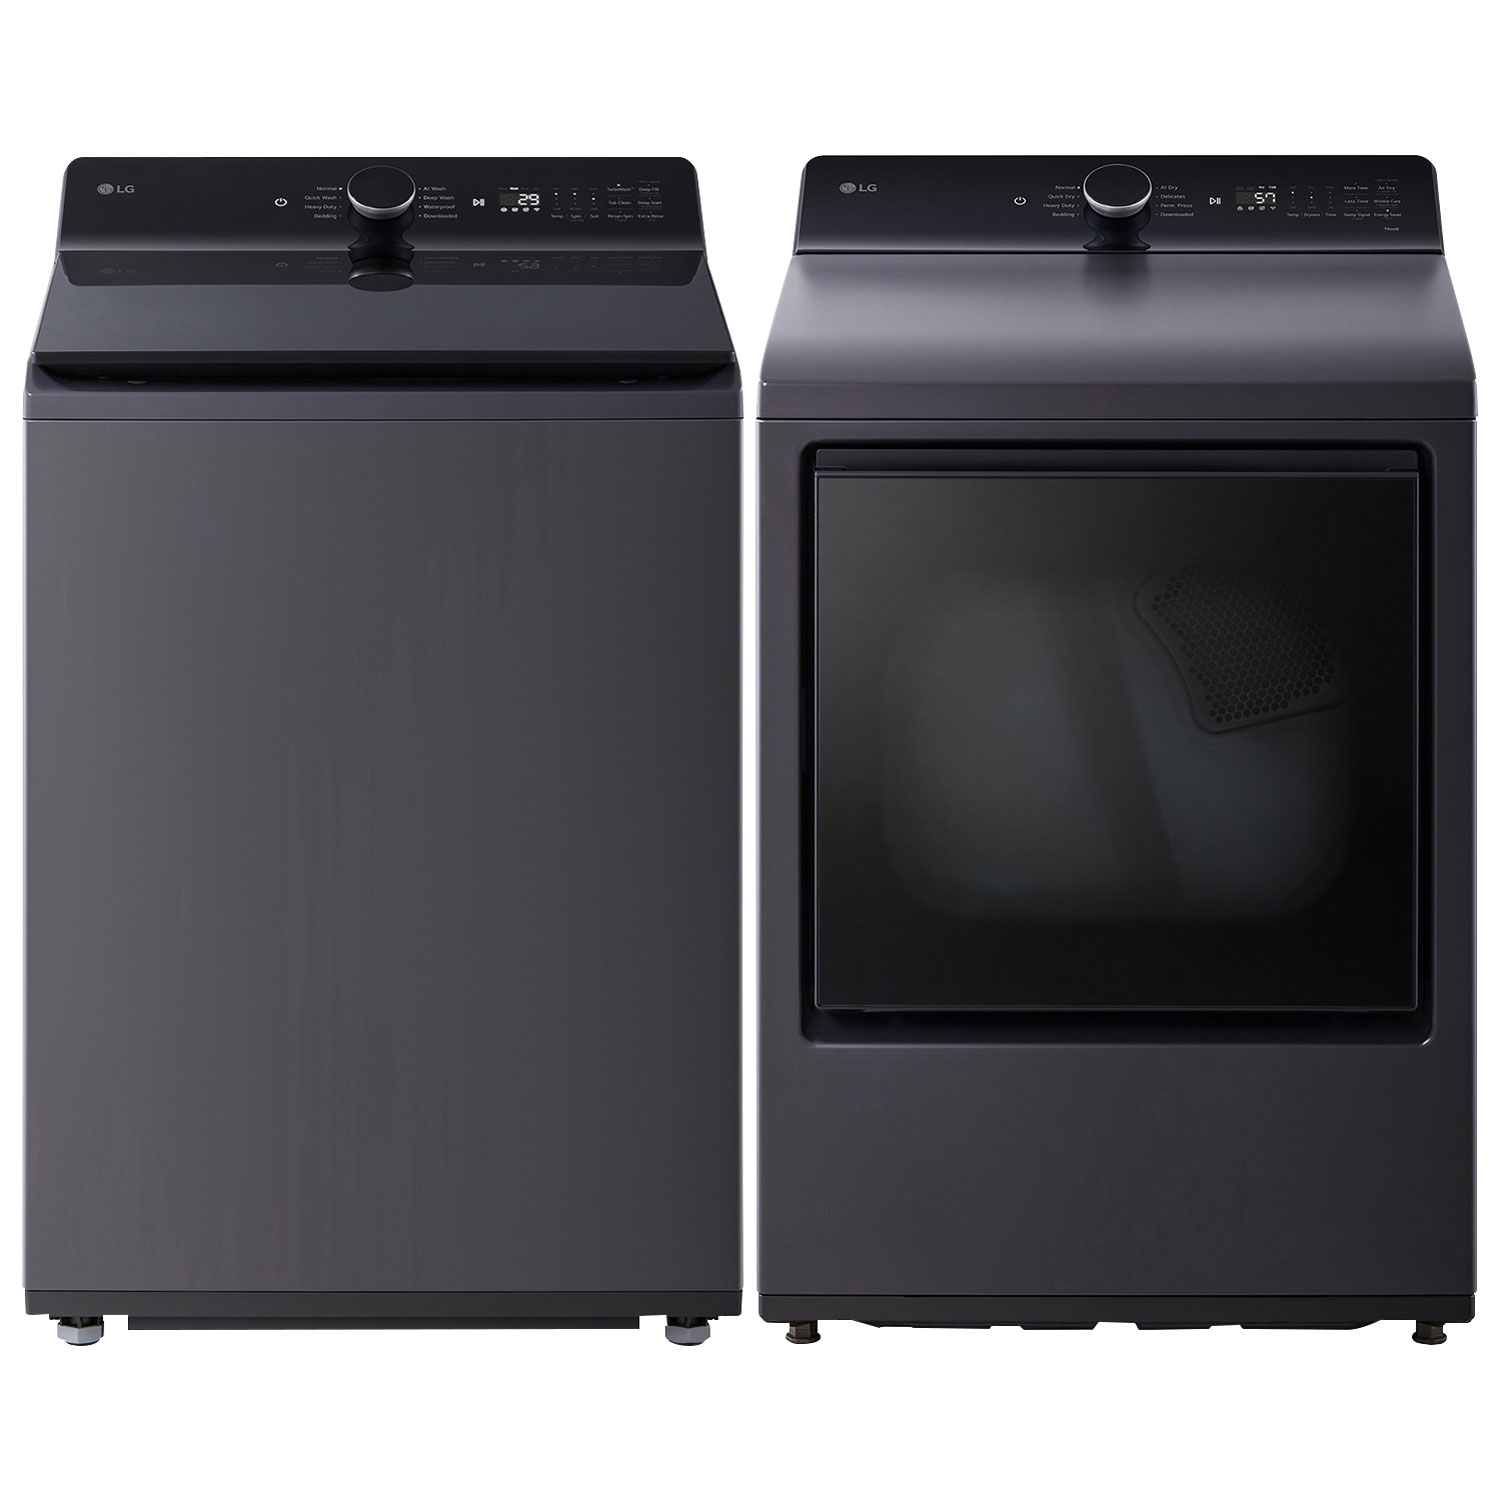 LG 6.1 Cu. Ft. High Efficiency Top Load Washer & 7.3 Cu. Ft. Rear Control Electric Dryer - Matte Black